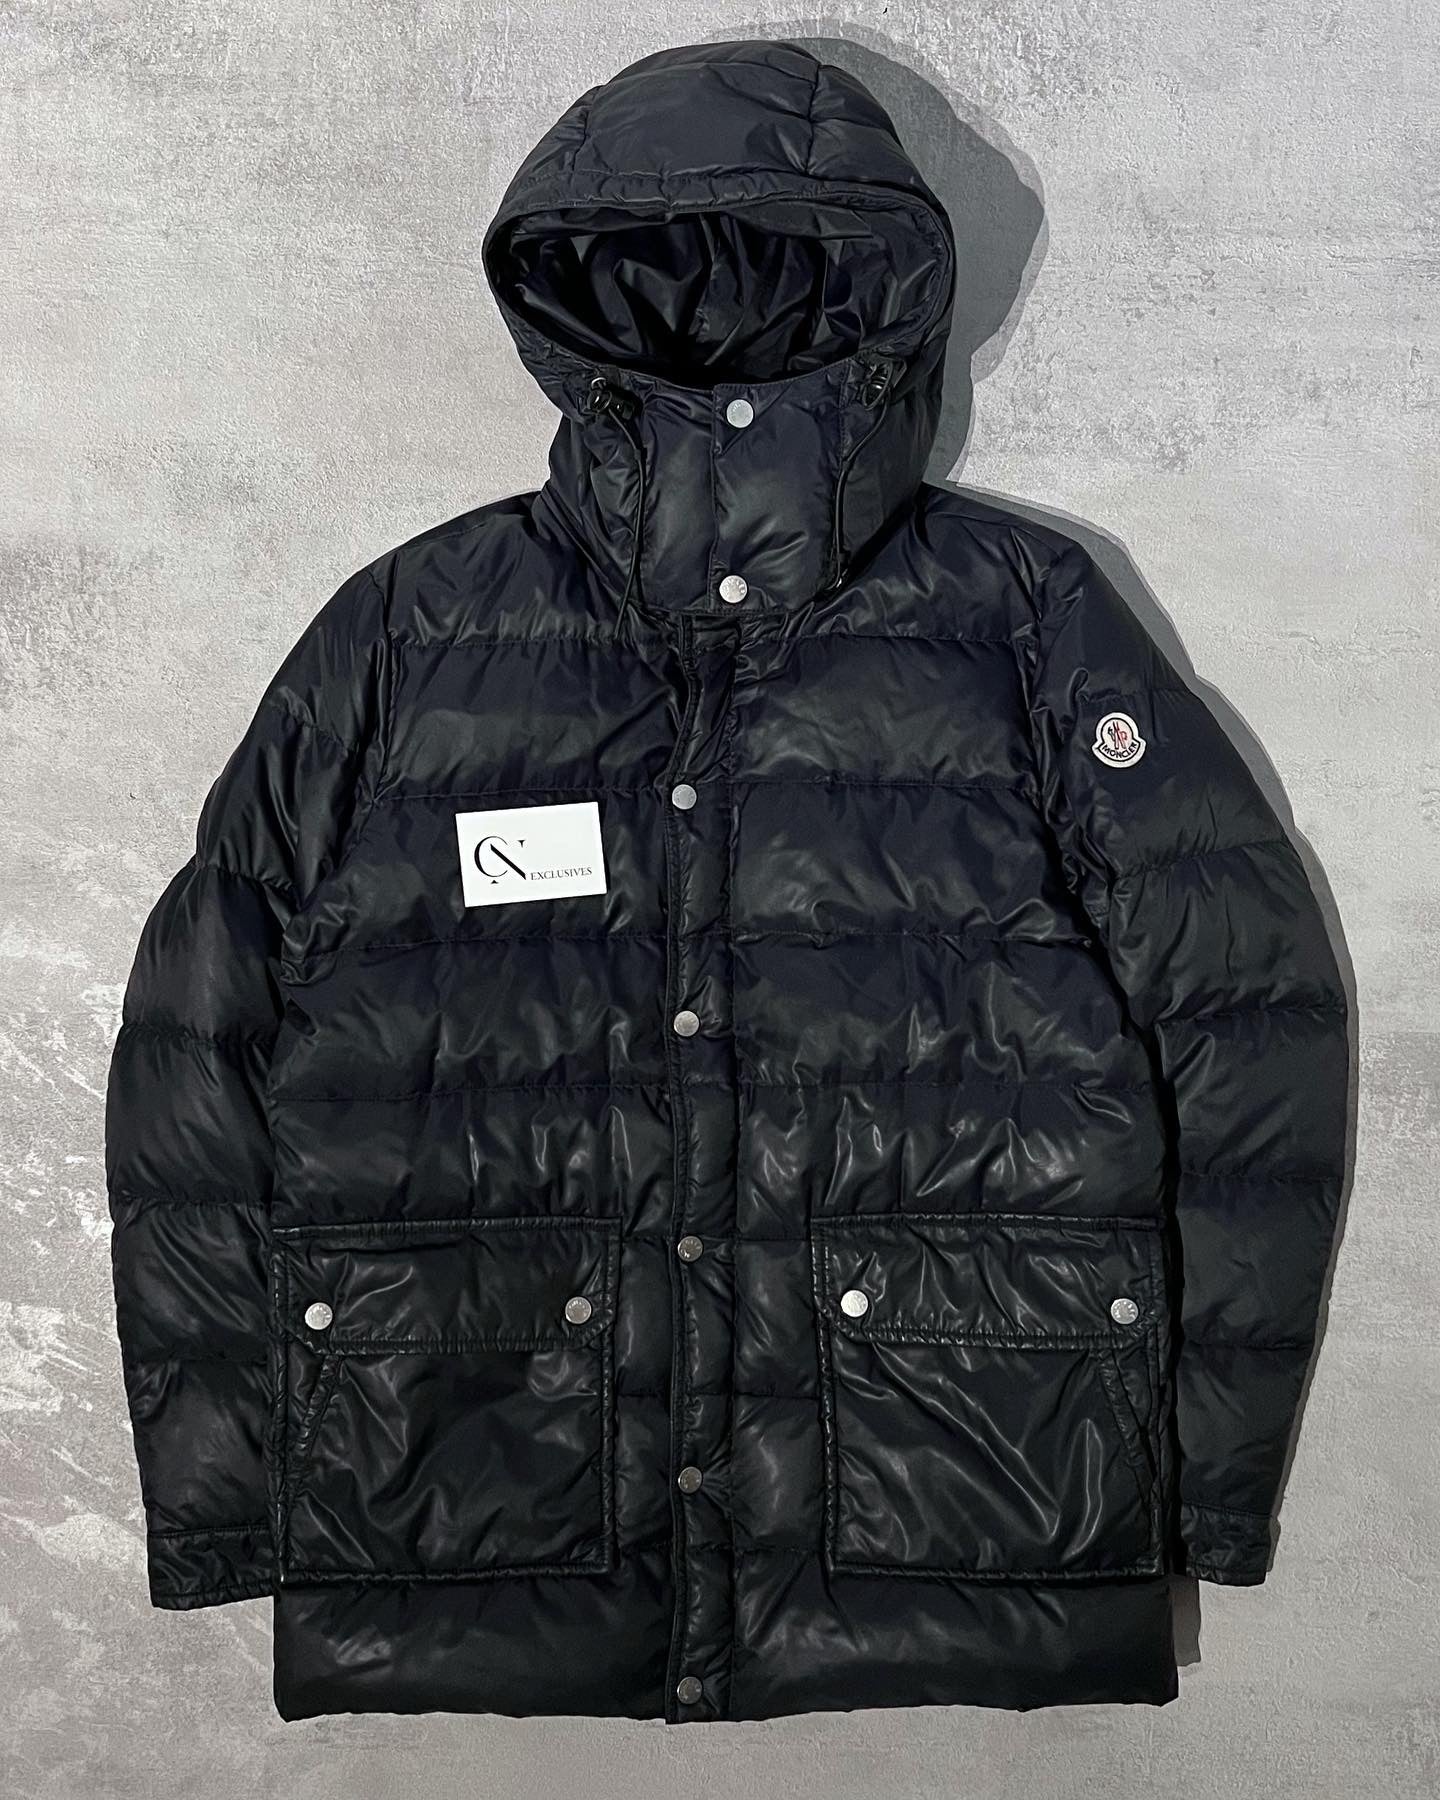 Moncler Winter Jacket - Size 1